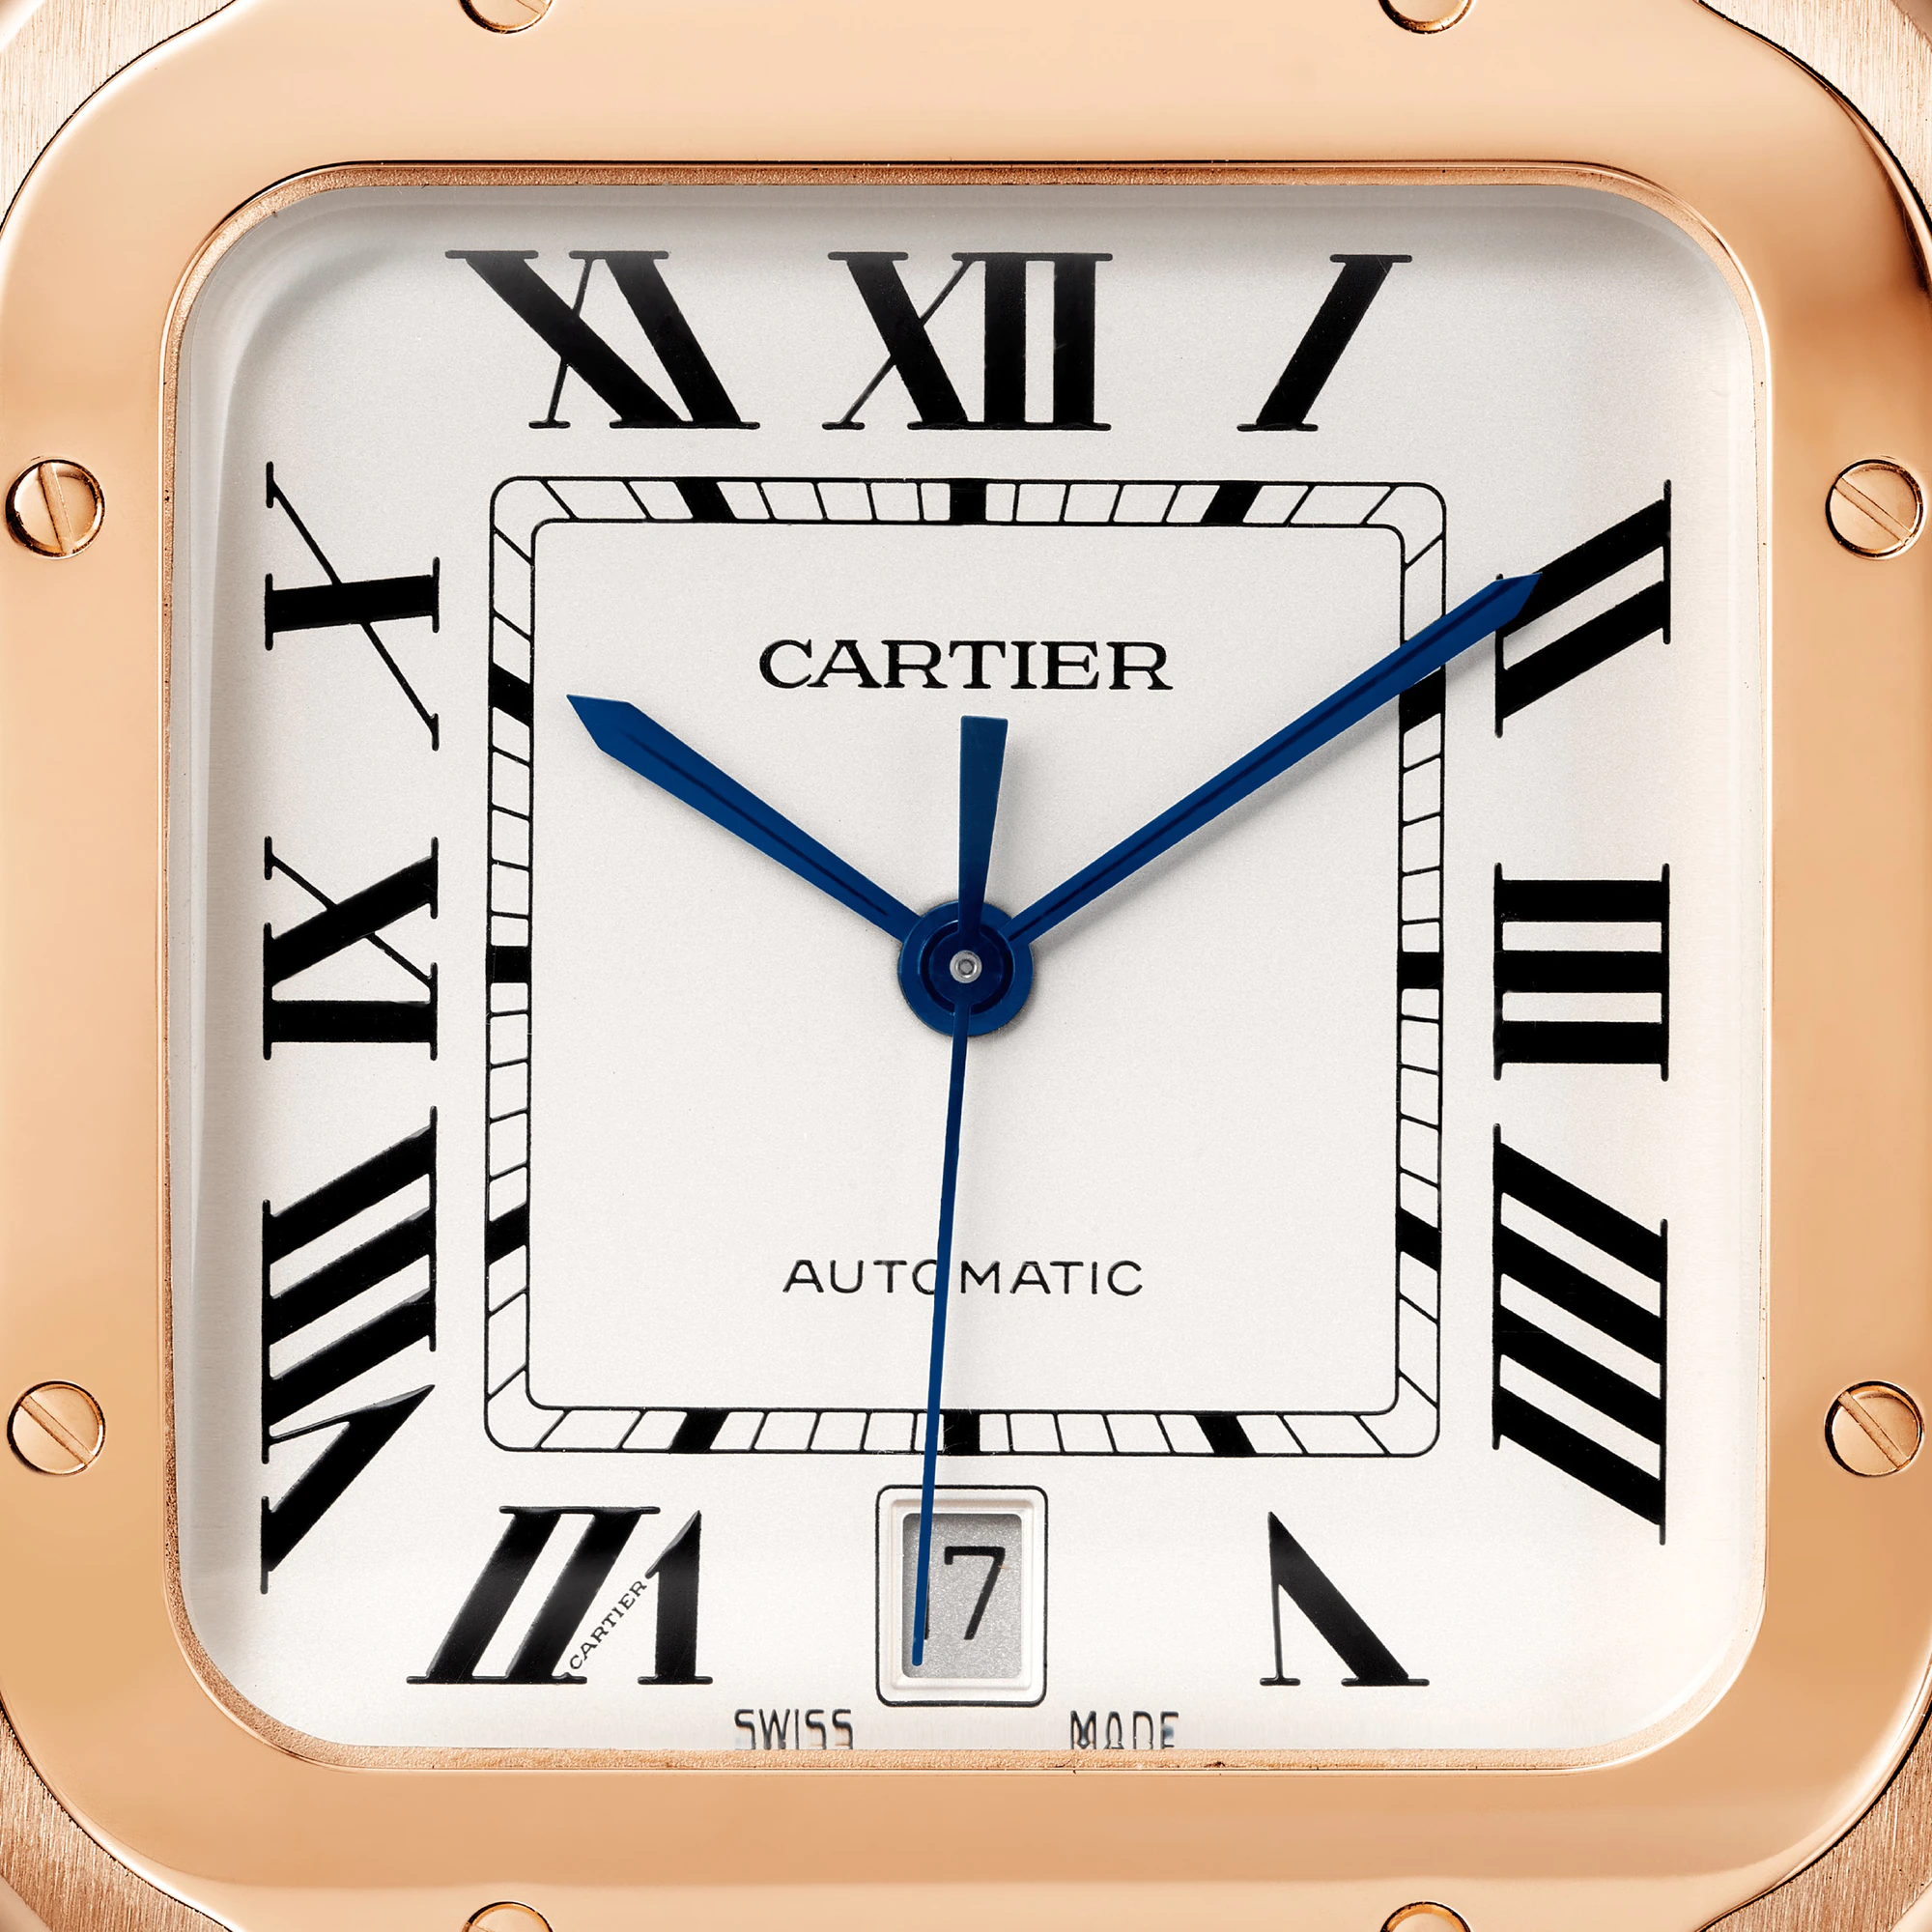 Cartier Santos de Cartier Watch - 39.8 mm Rose Gold Case - Silvered Opaline  Dial - Alligator Skin Bracelet - WGSA0018